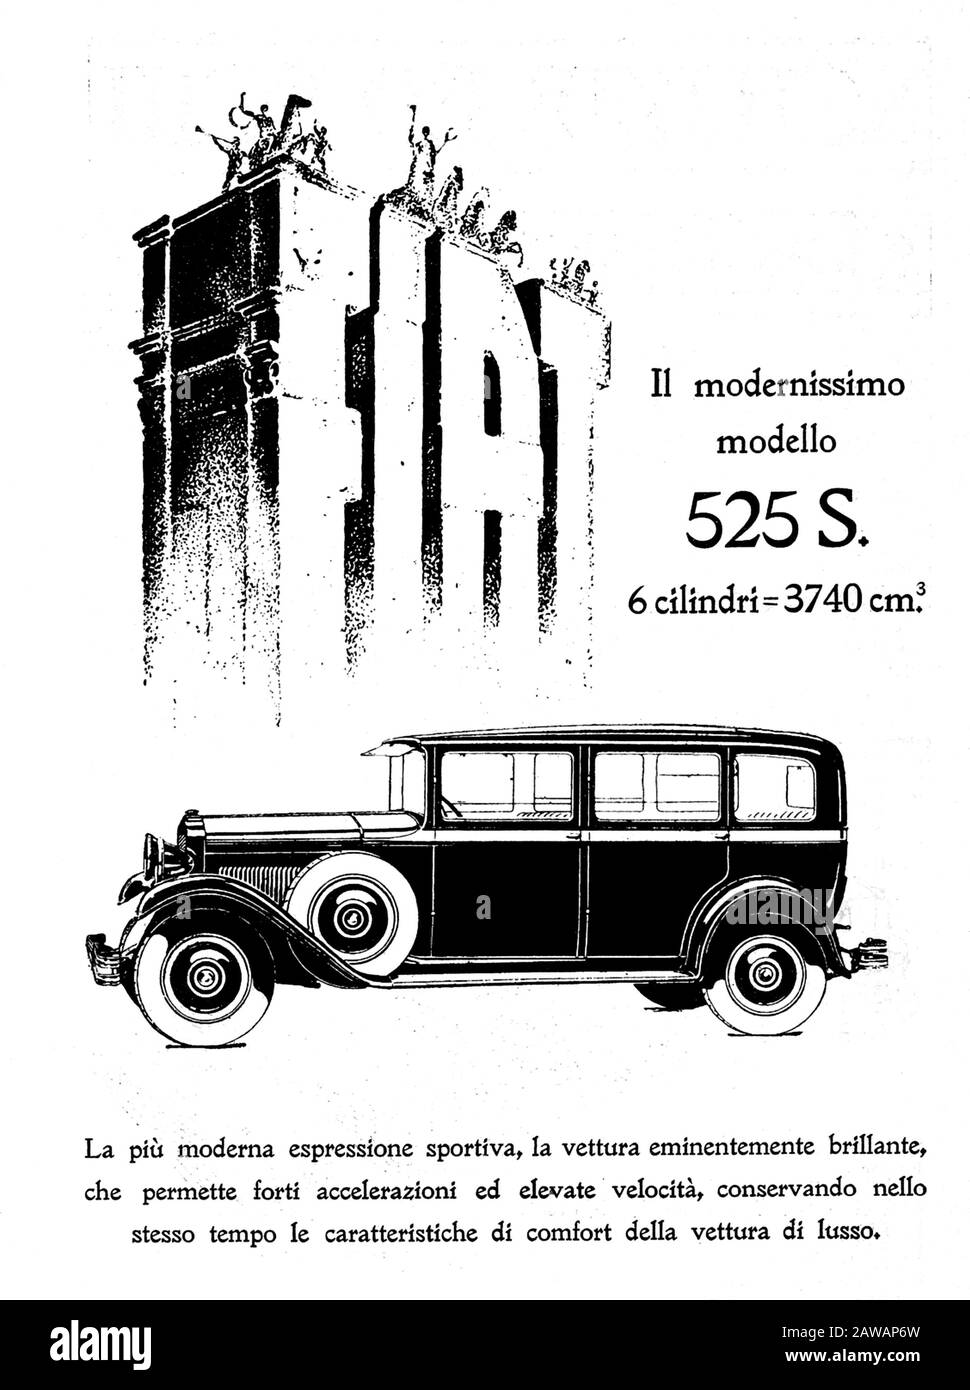 1929 , ITALY : The italian car industry FIAT ( F.I.A.T. Fabbrica Italiana Automobili Torino ) advertising for FIAT 525 S model  - GIANNI AGNELLI - aut Stock Photo